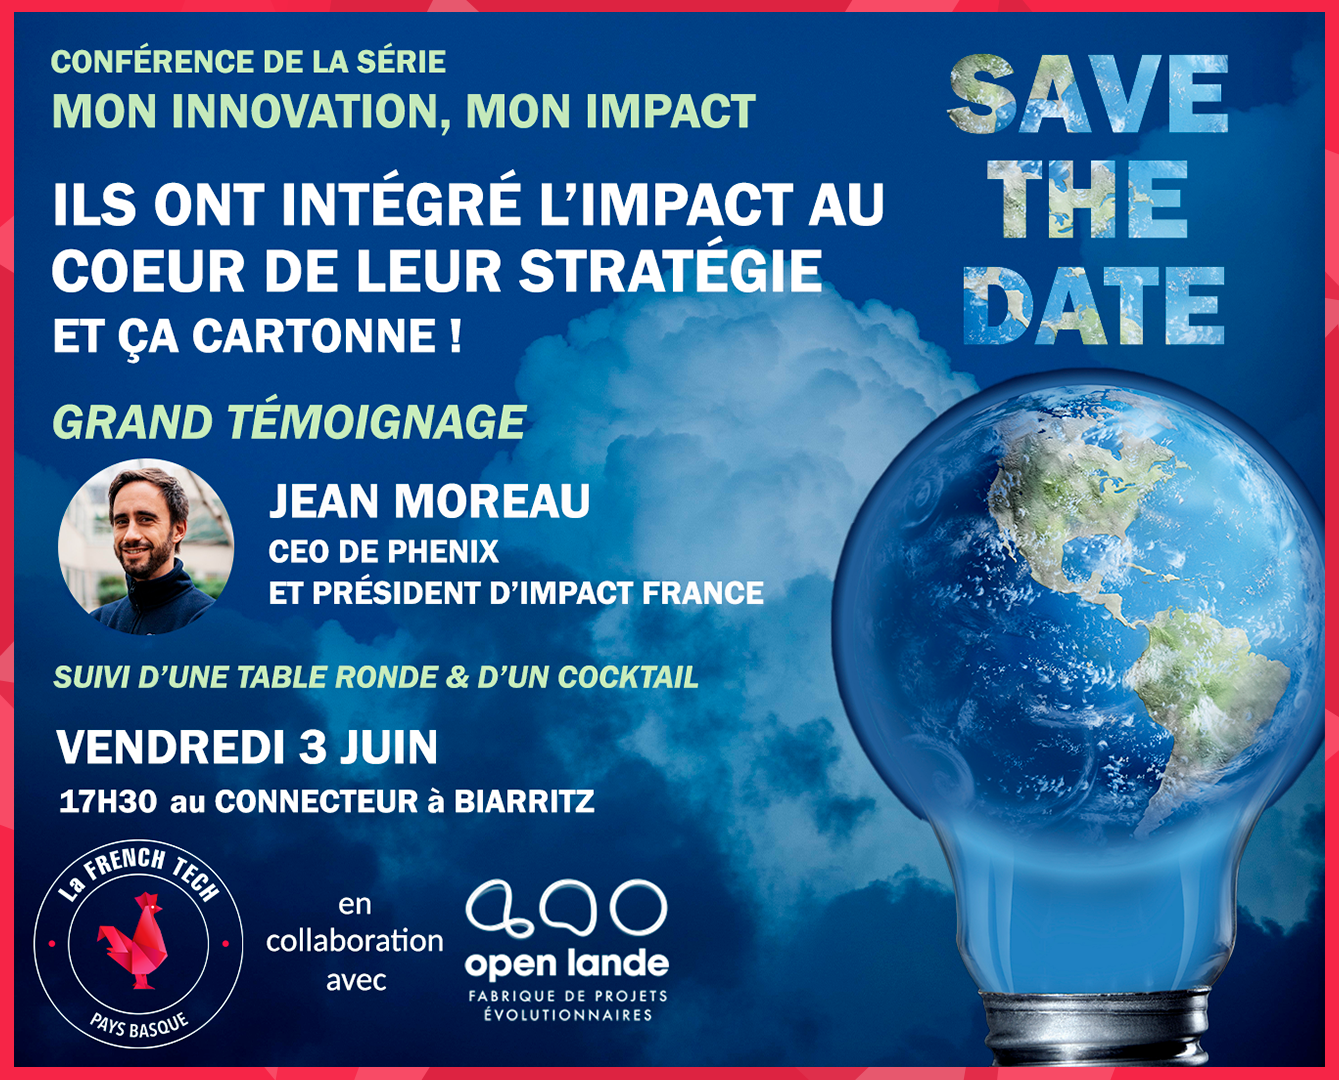 SAVE THE DATE "Mon innovation Mon impact" le vendredi 3 juin : Salon + Grande conférence + cocktail